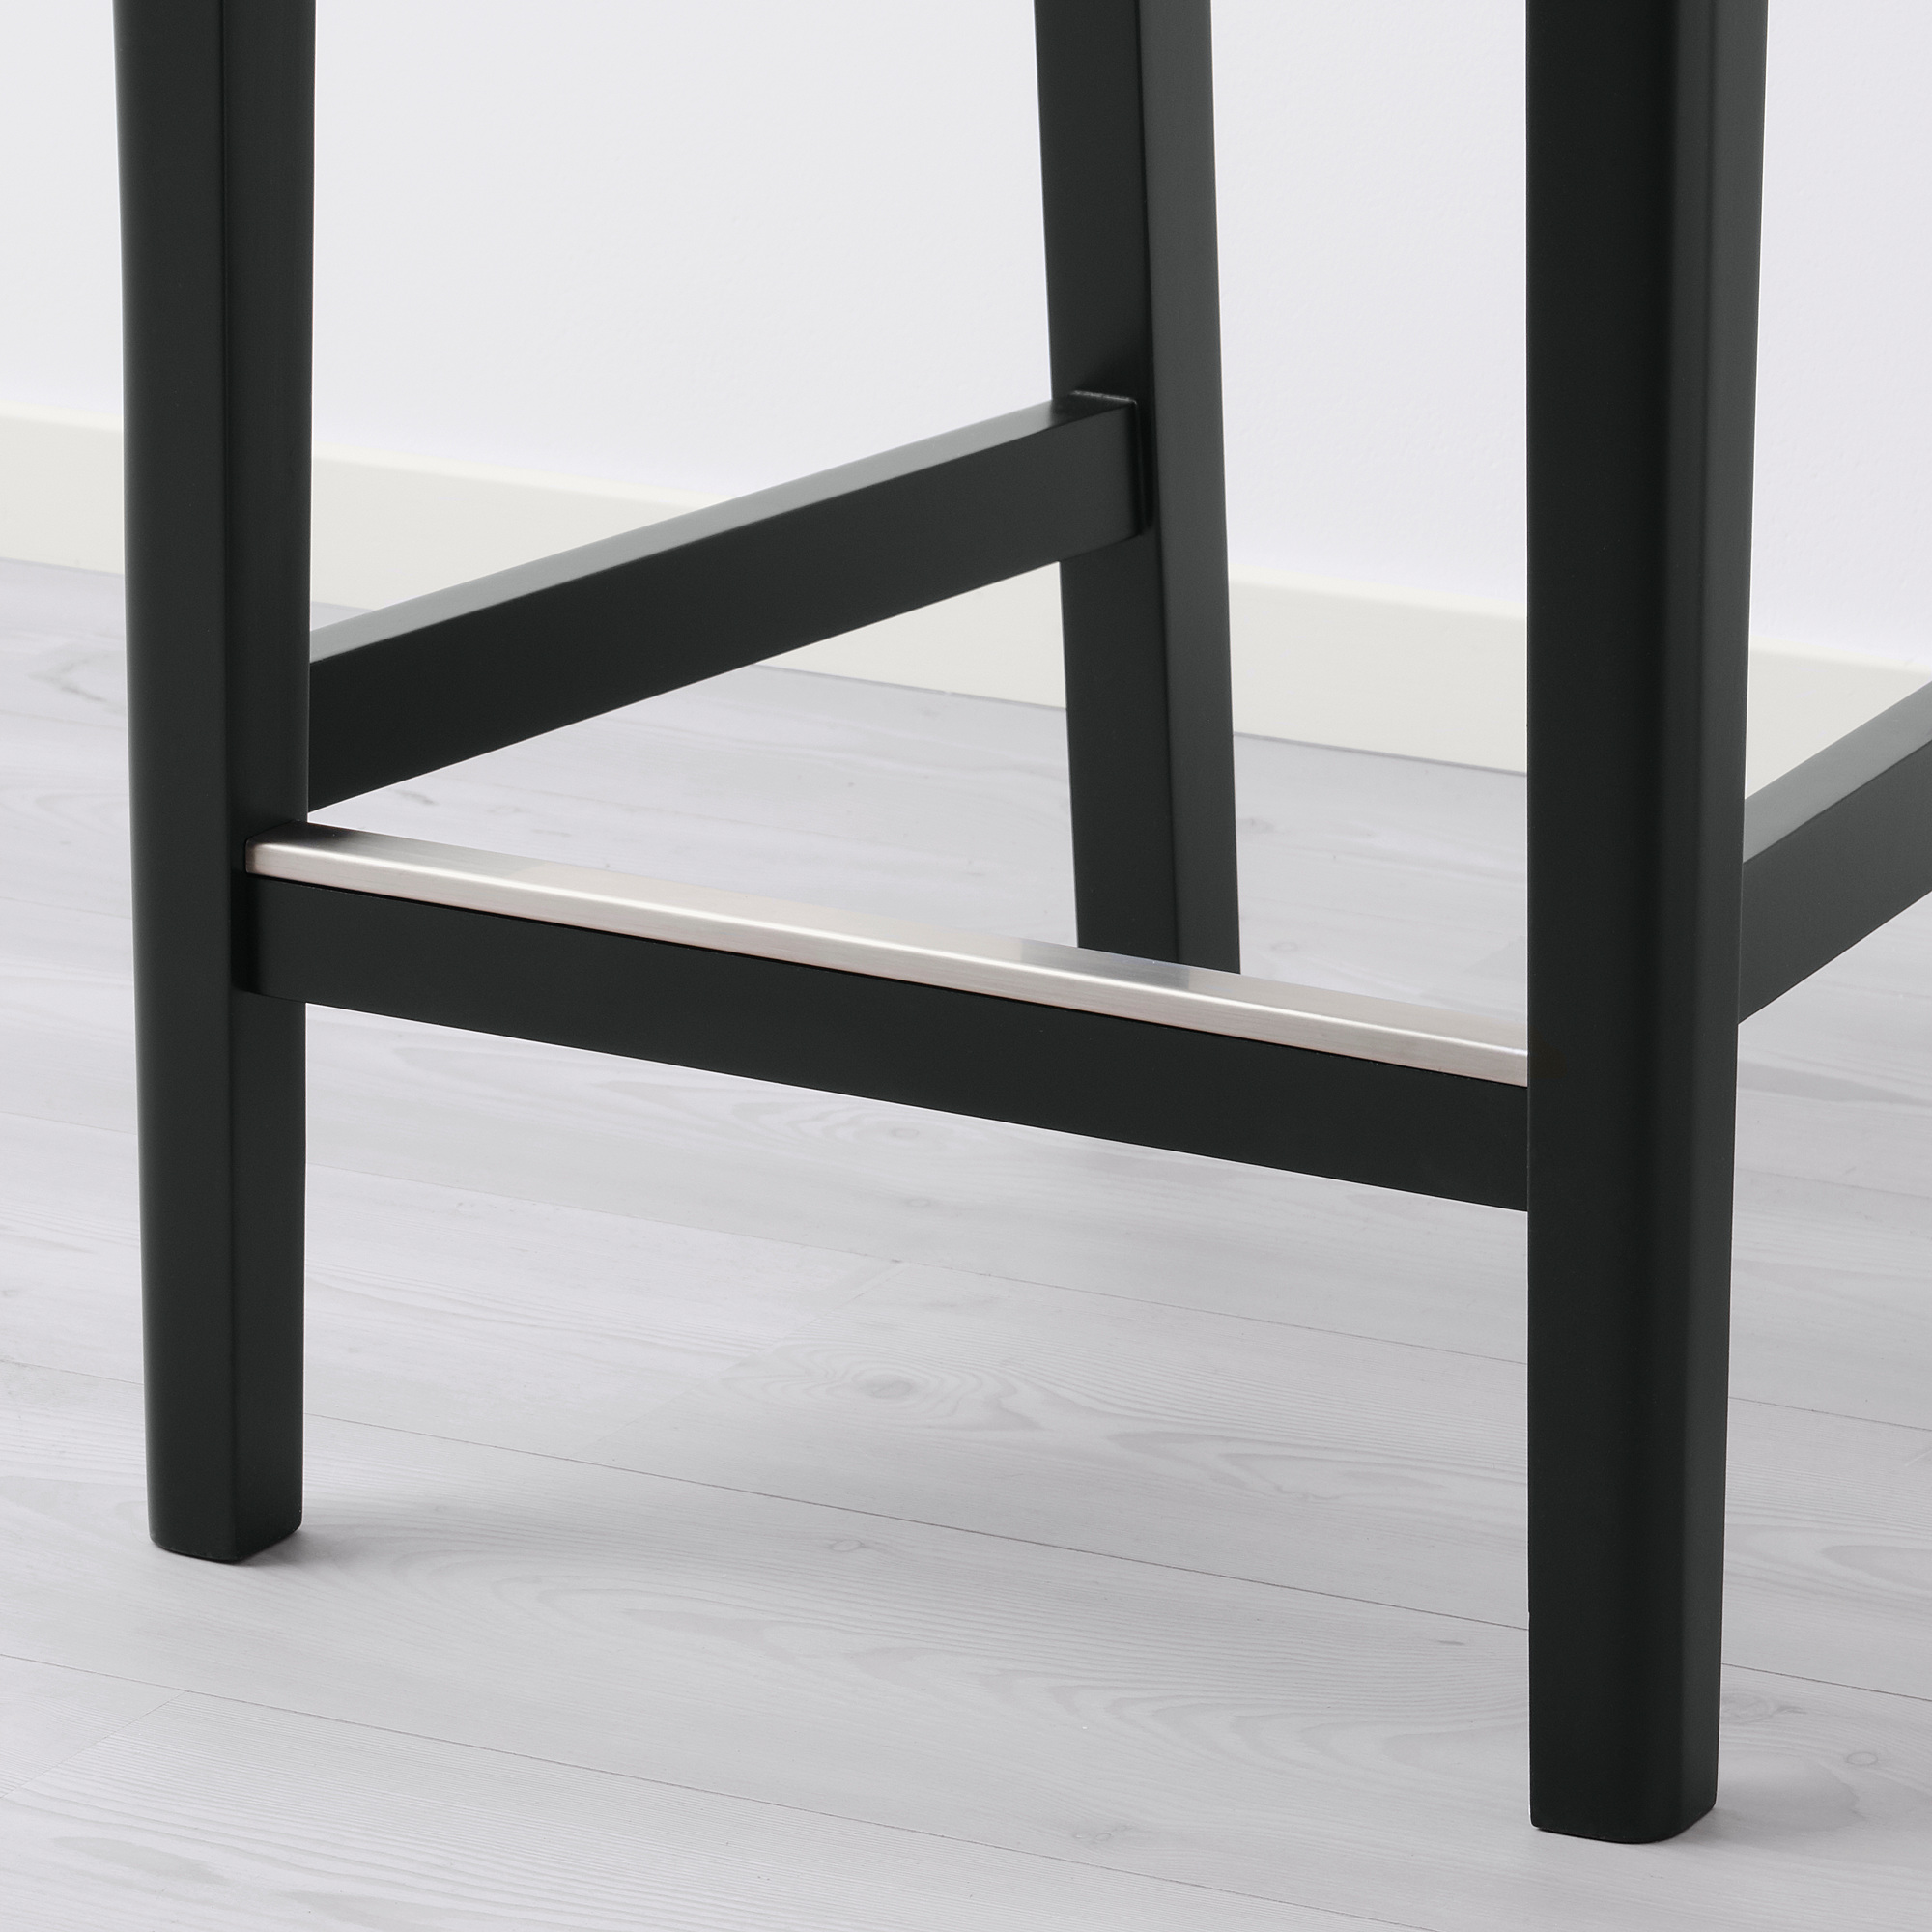 BERGMUND bar stool with backrest frame